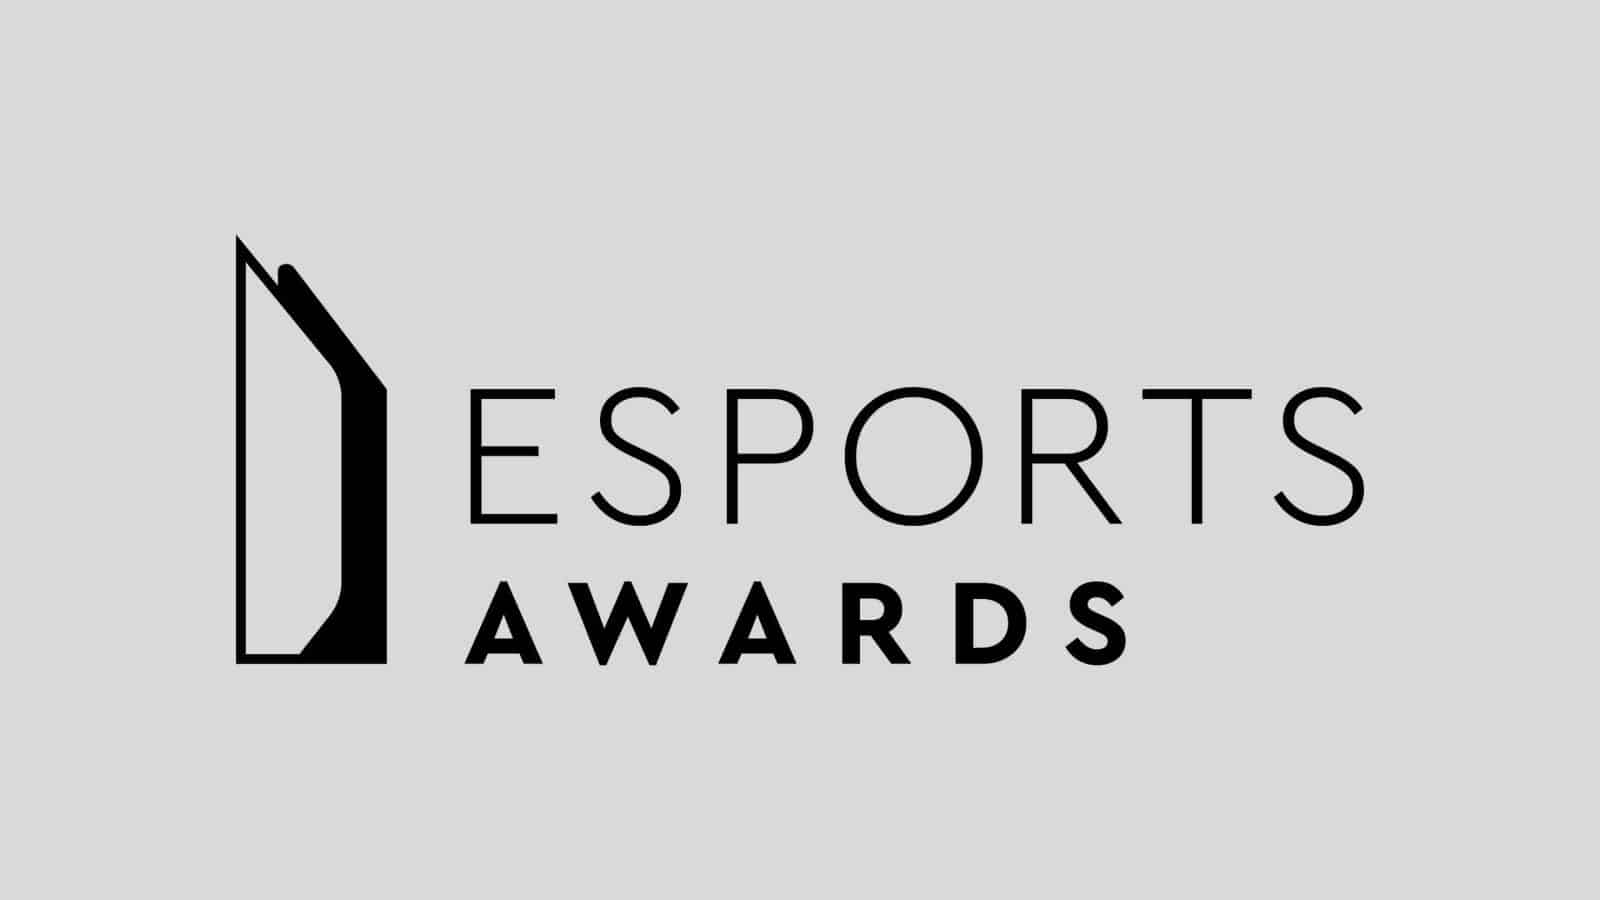 Esports awards logo on a grey backdrop